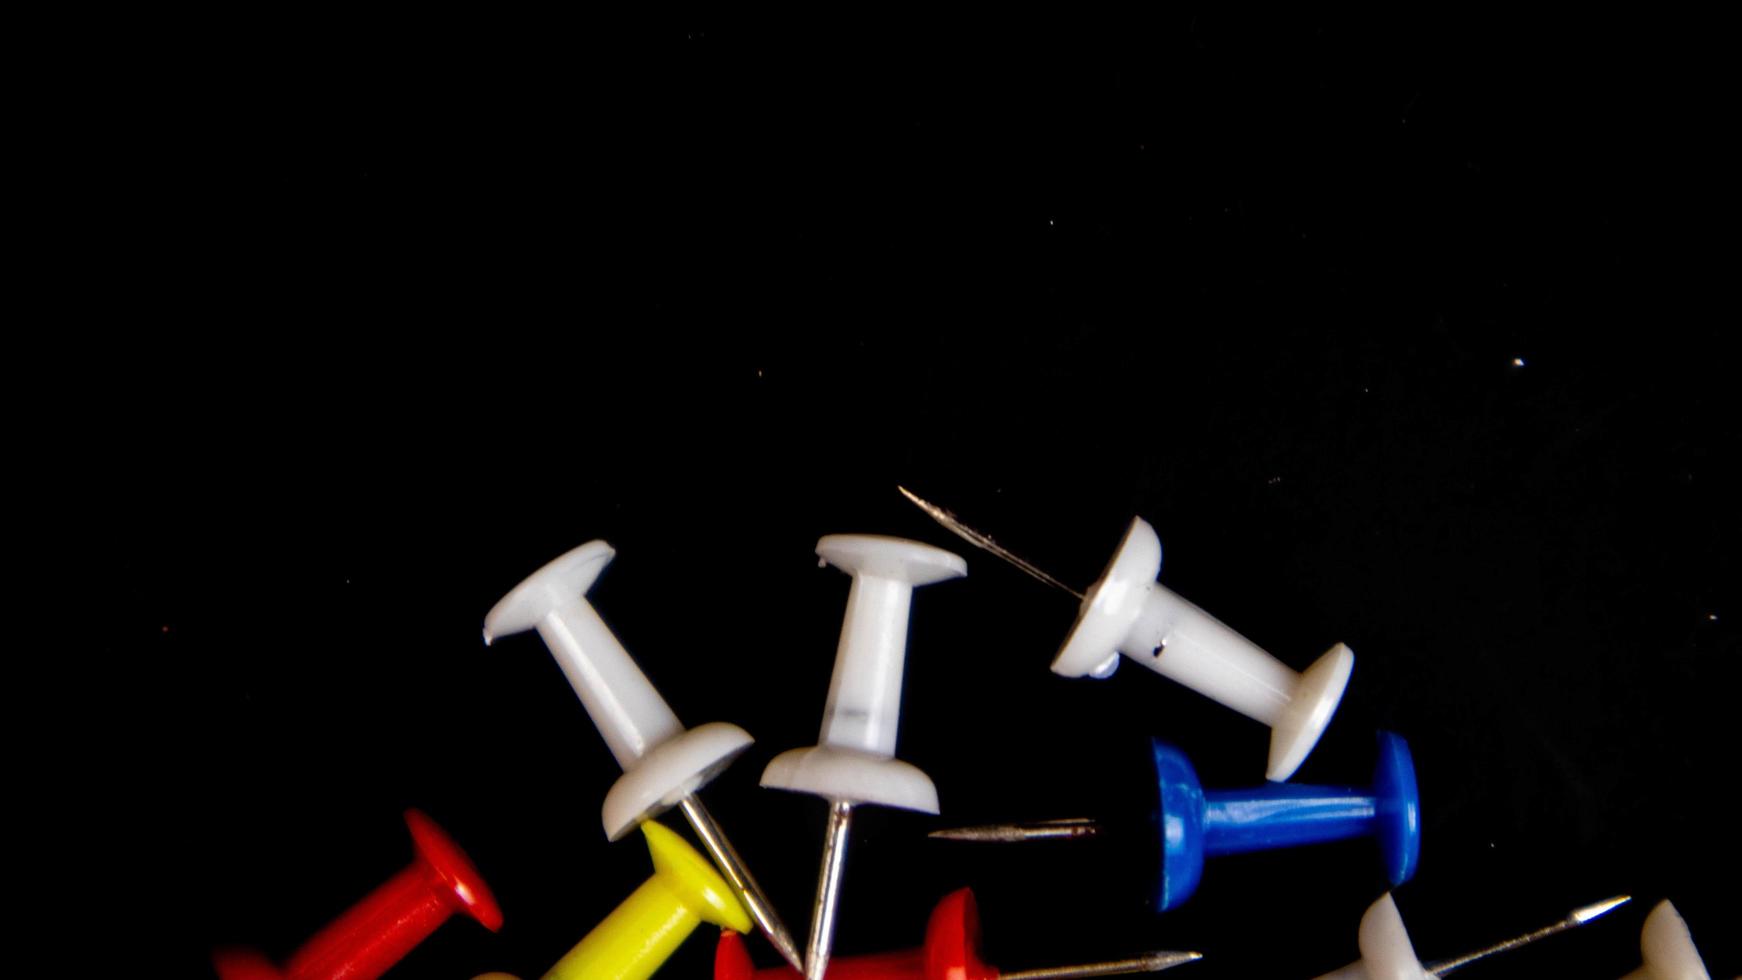 multicolored thumbtacks on a black background photo